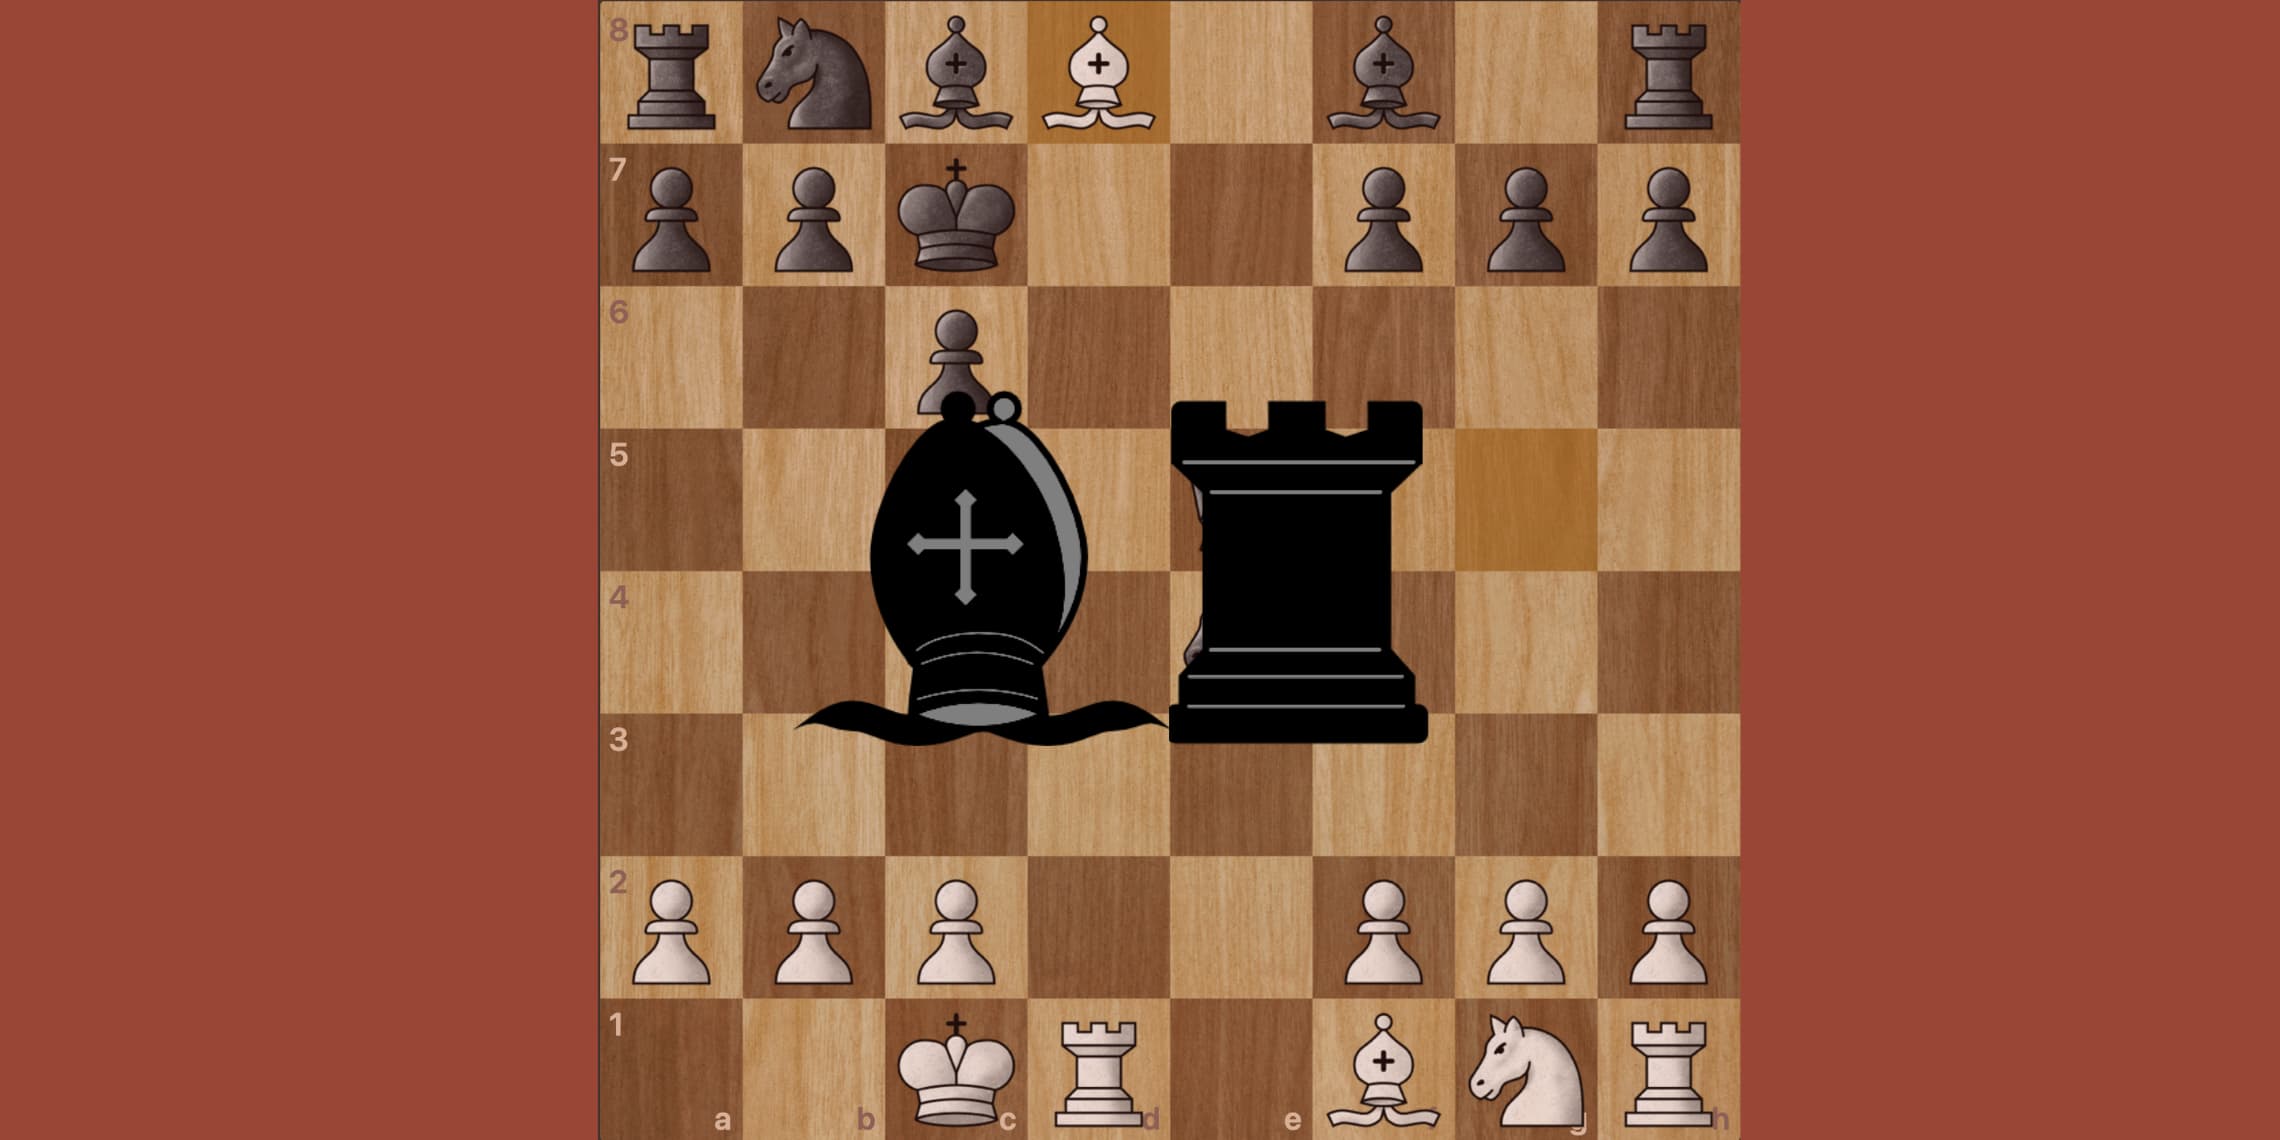 Reti's Mate Checkmate Pattern